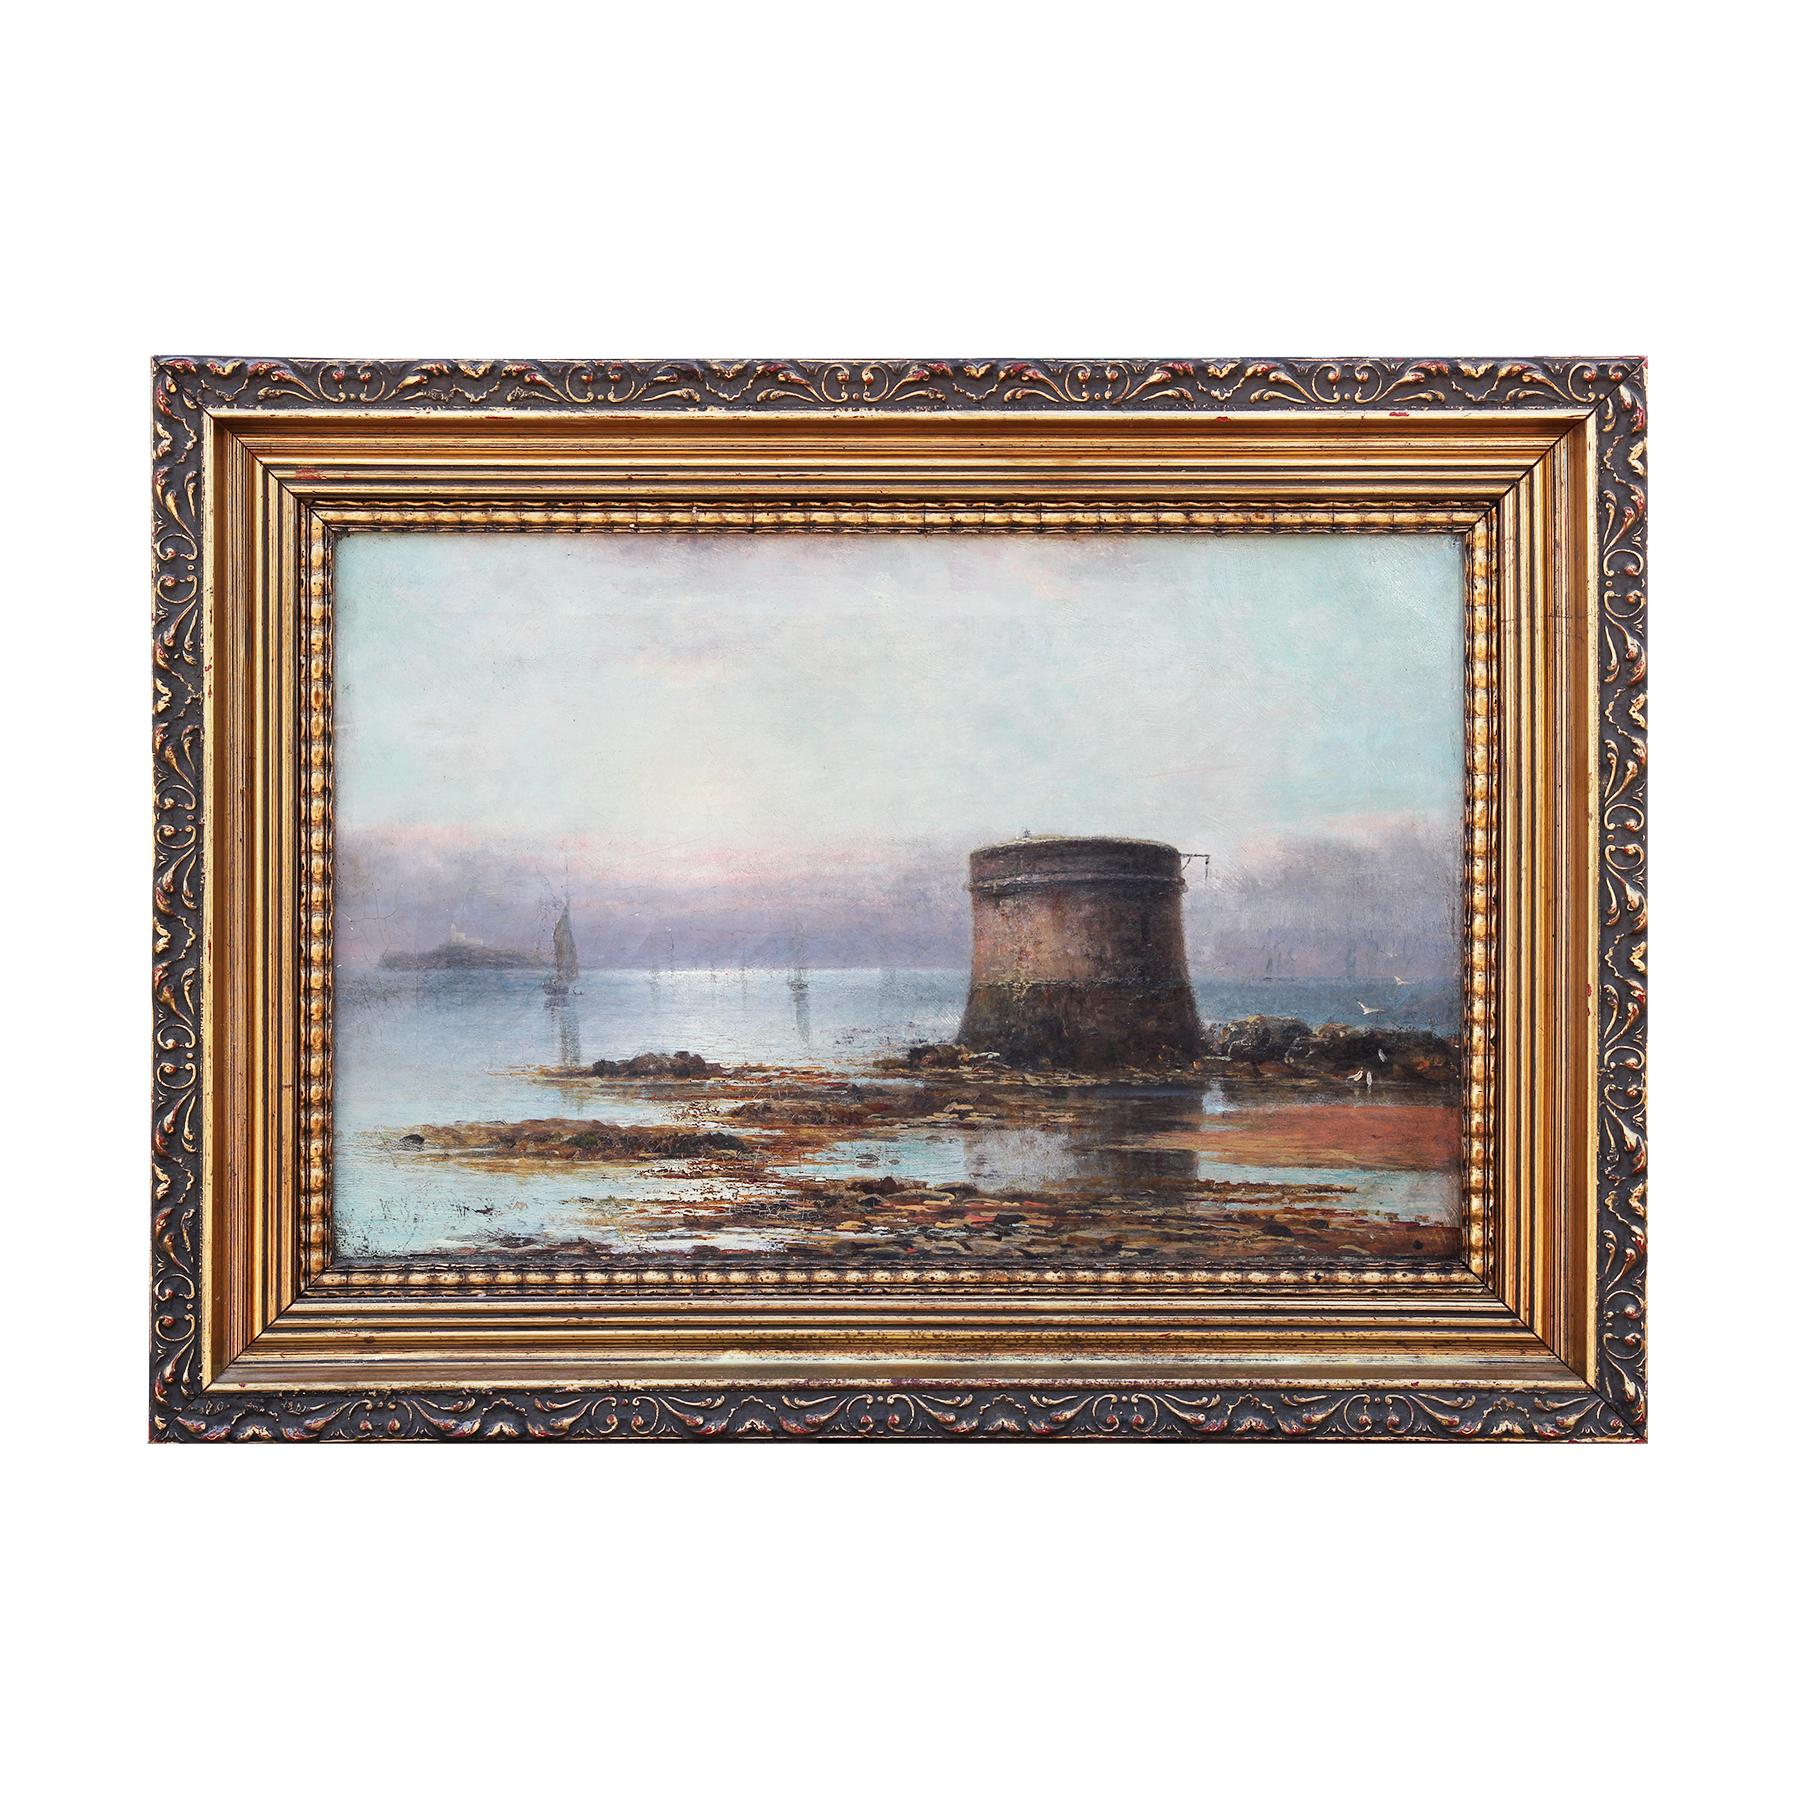 William Sadler Landscape Painting - Pastel Toned Romantic Realistic Coastal Landscape of a Martello Tower